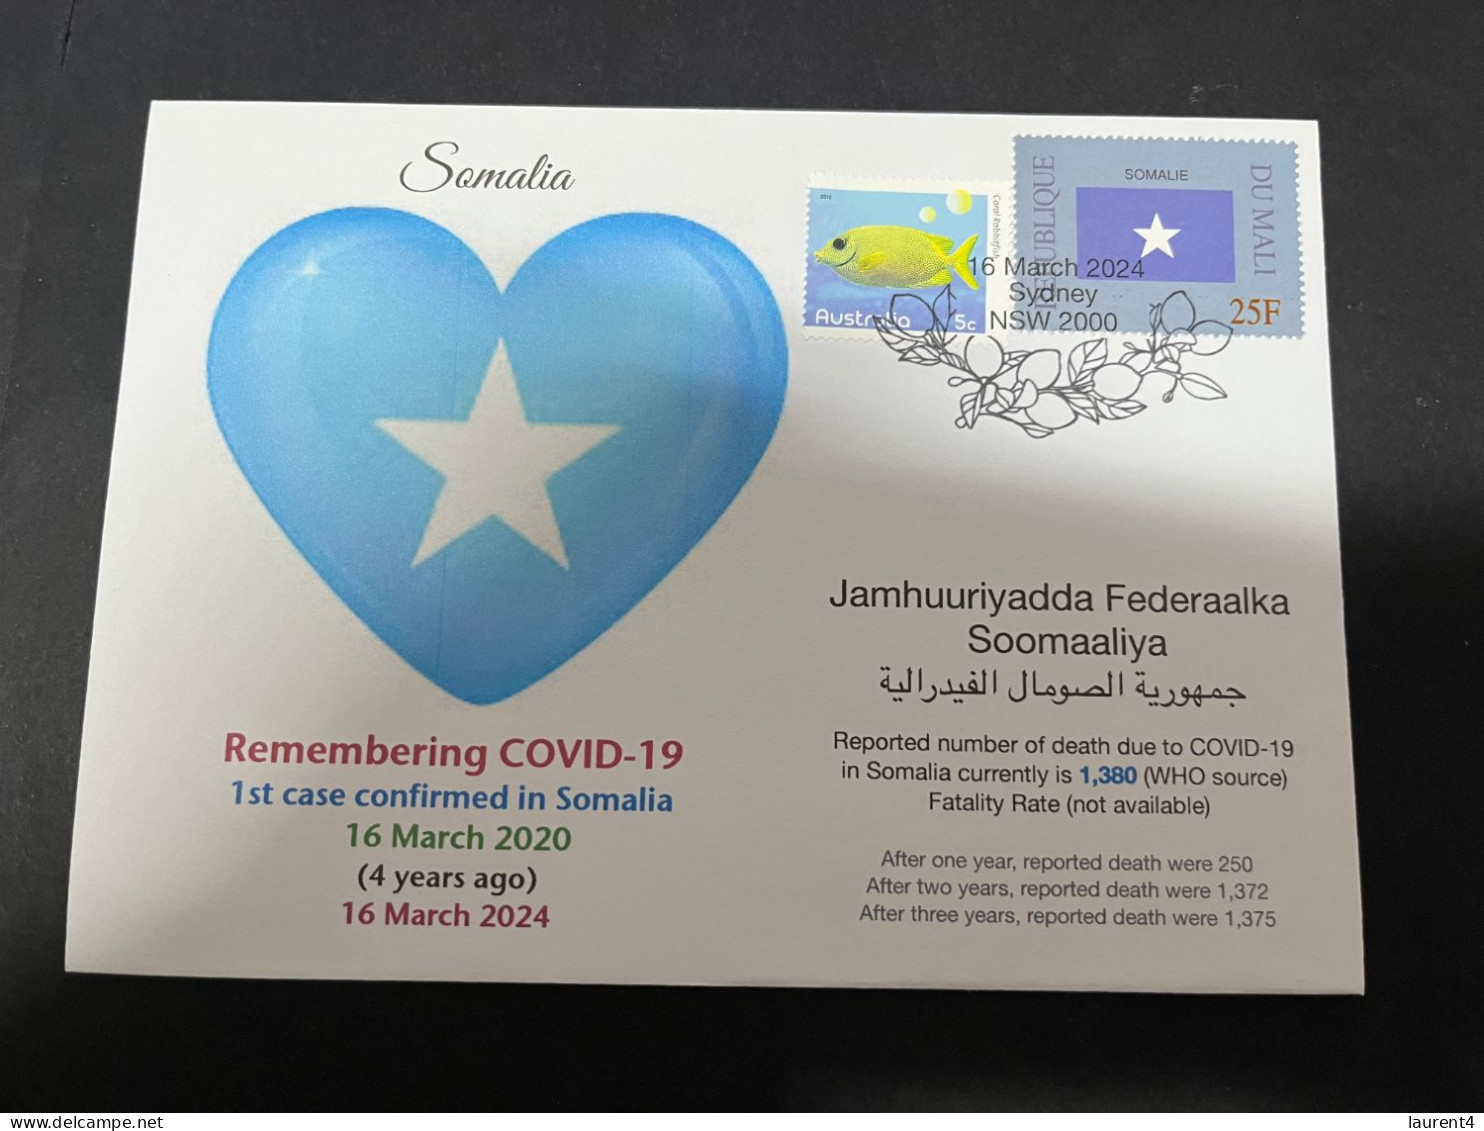 16-3-2024 (3 Y 12) COVID-19 4th Anniversary - Somalia - 16 March 2024 (with Somalia Mali Flag Stamp) - Disease